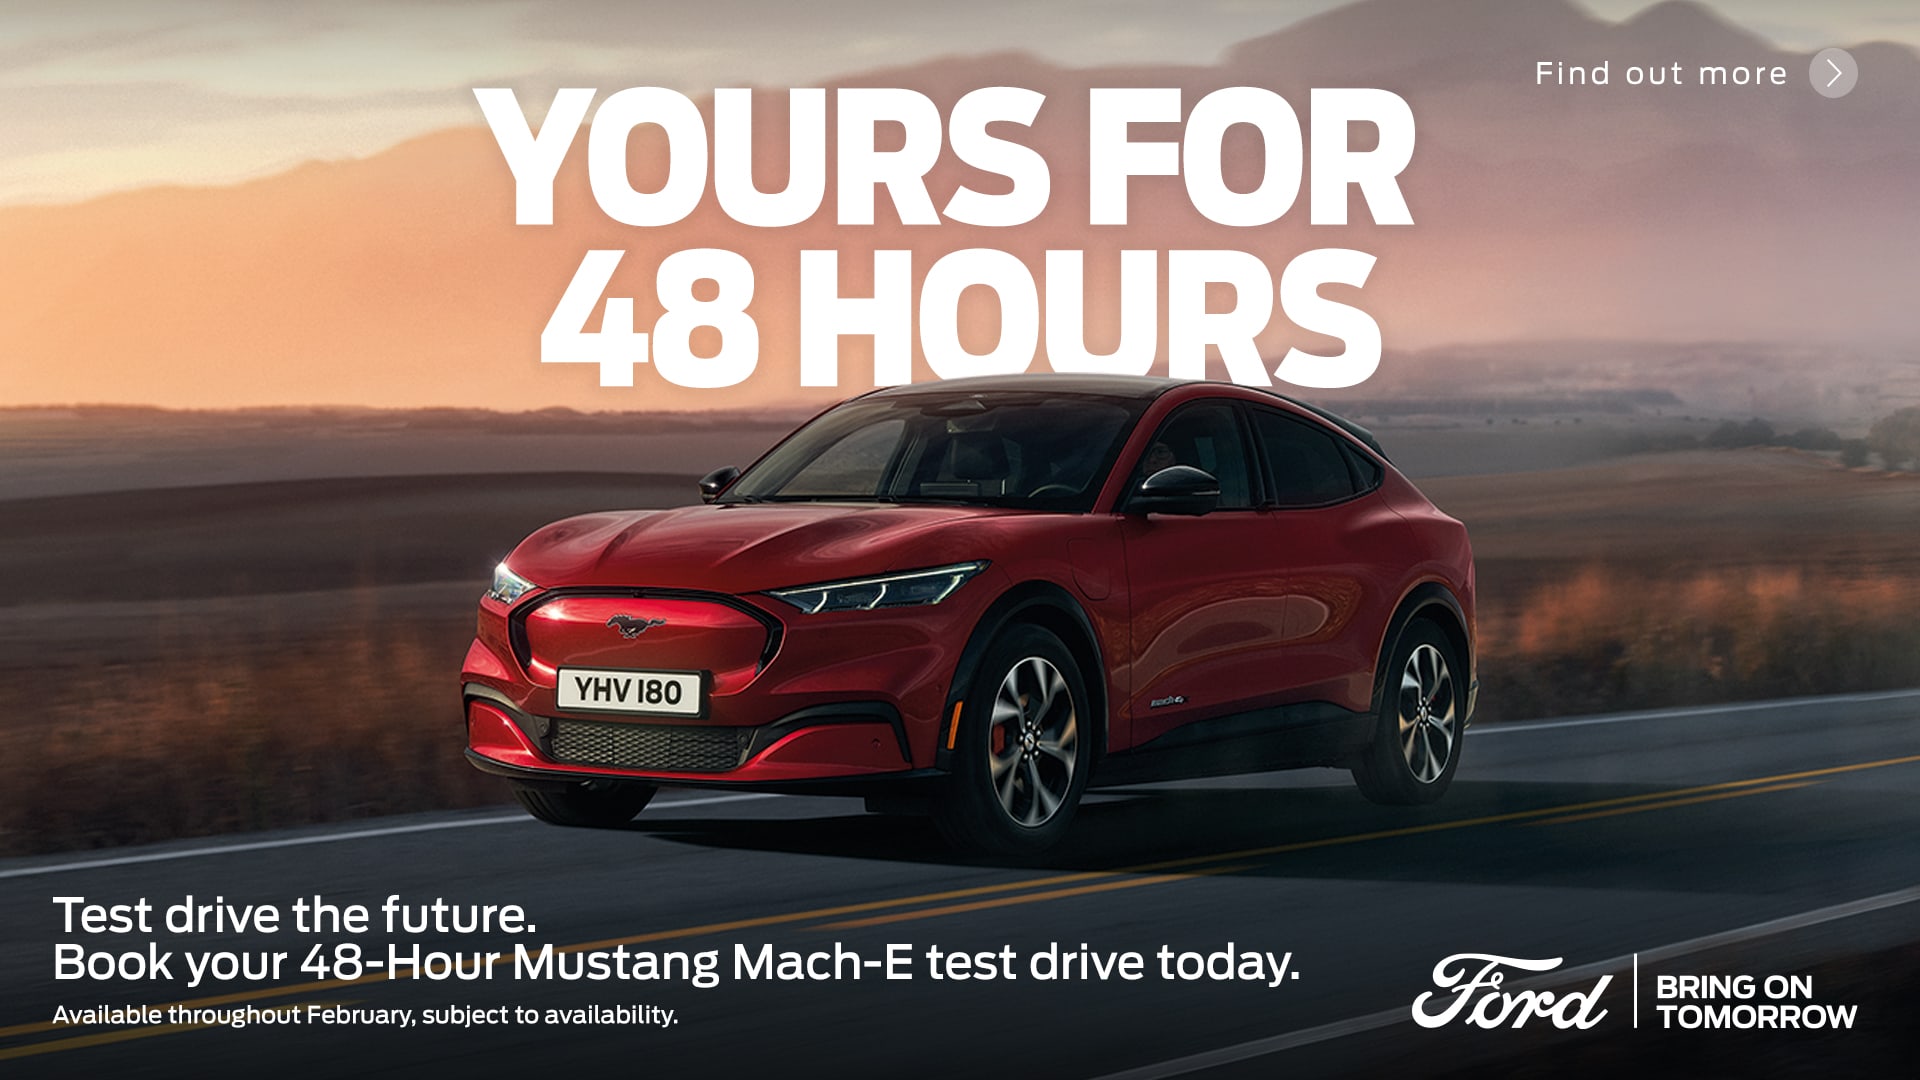 Mustang Mach-E 48 Hour Test Drive